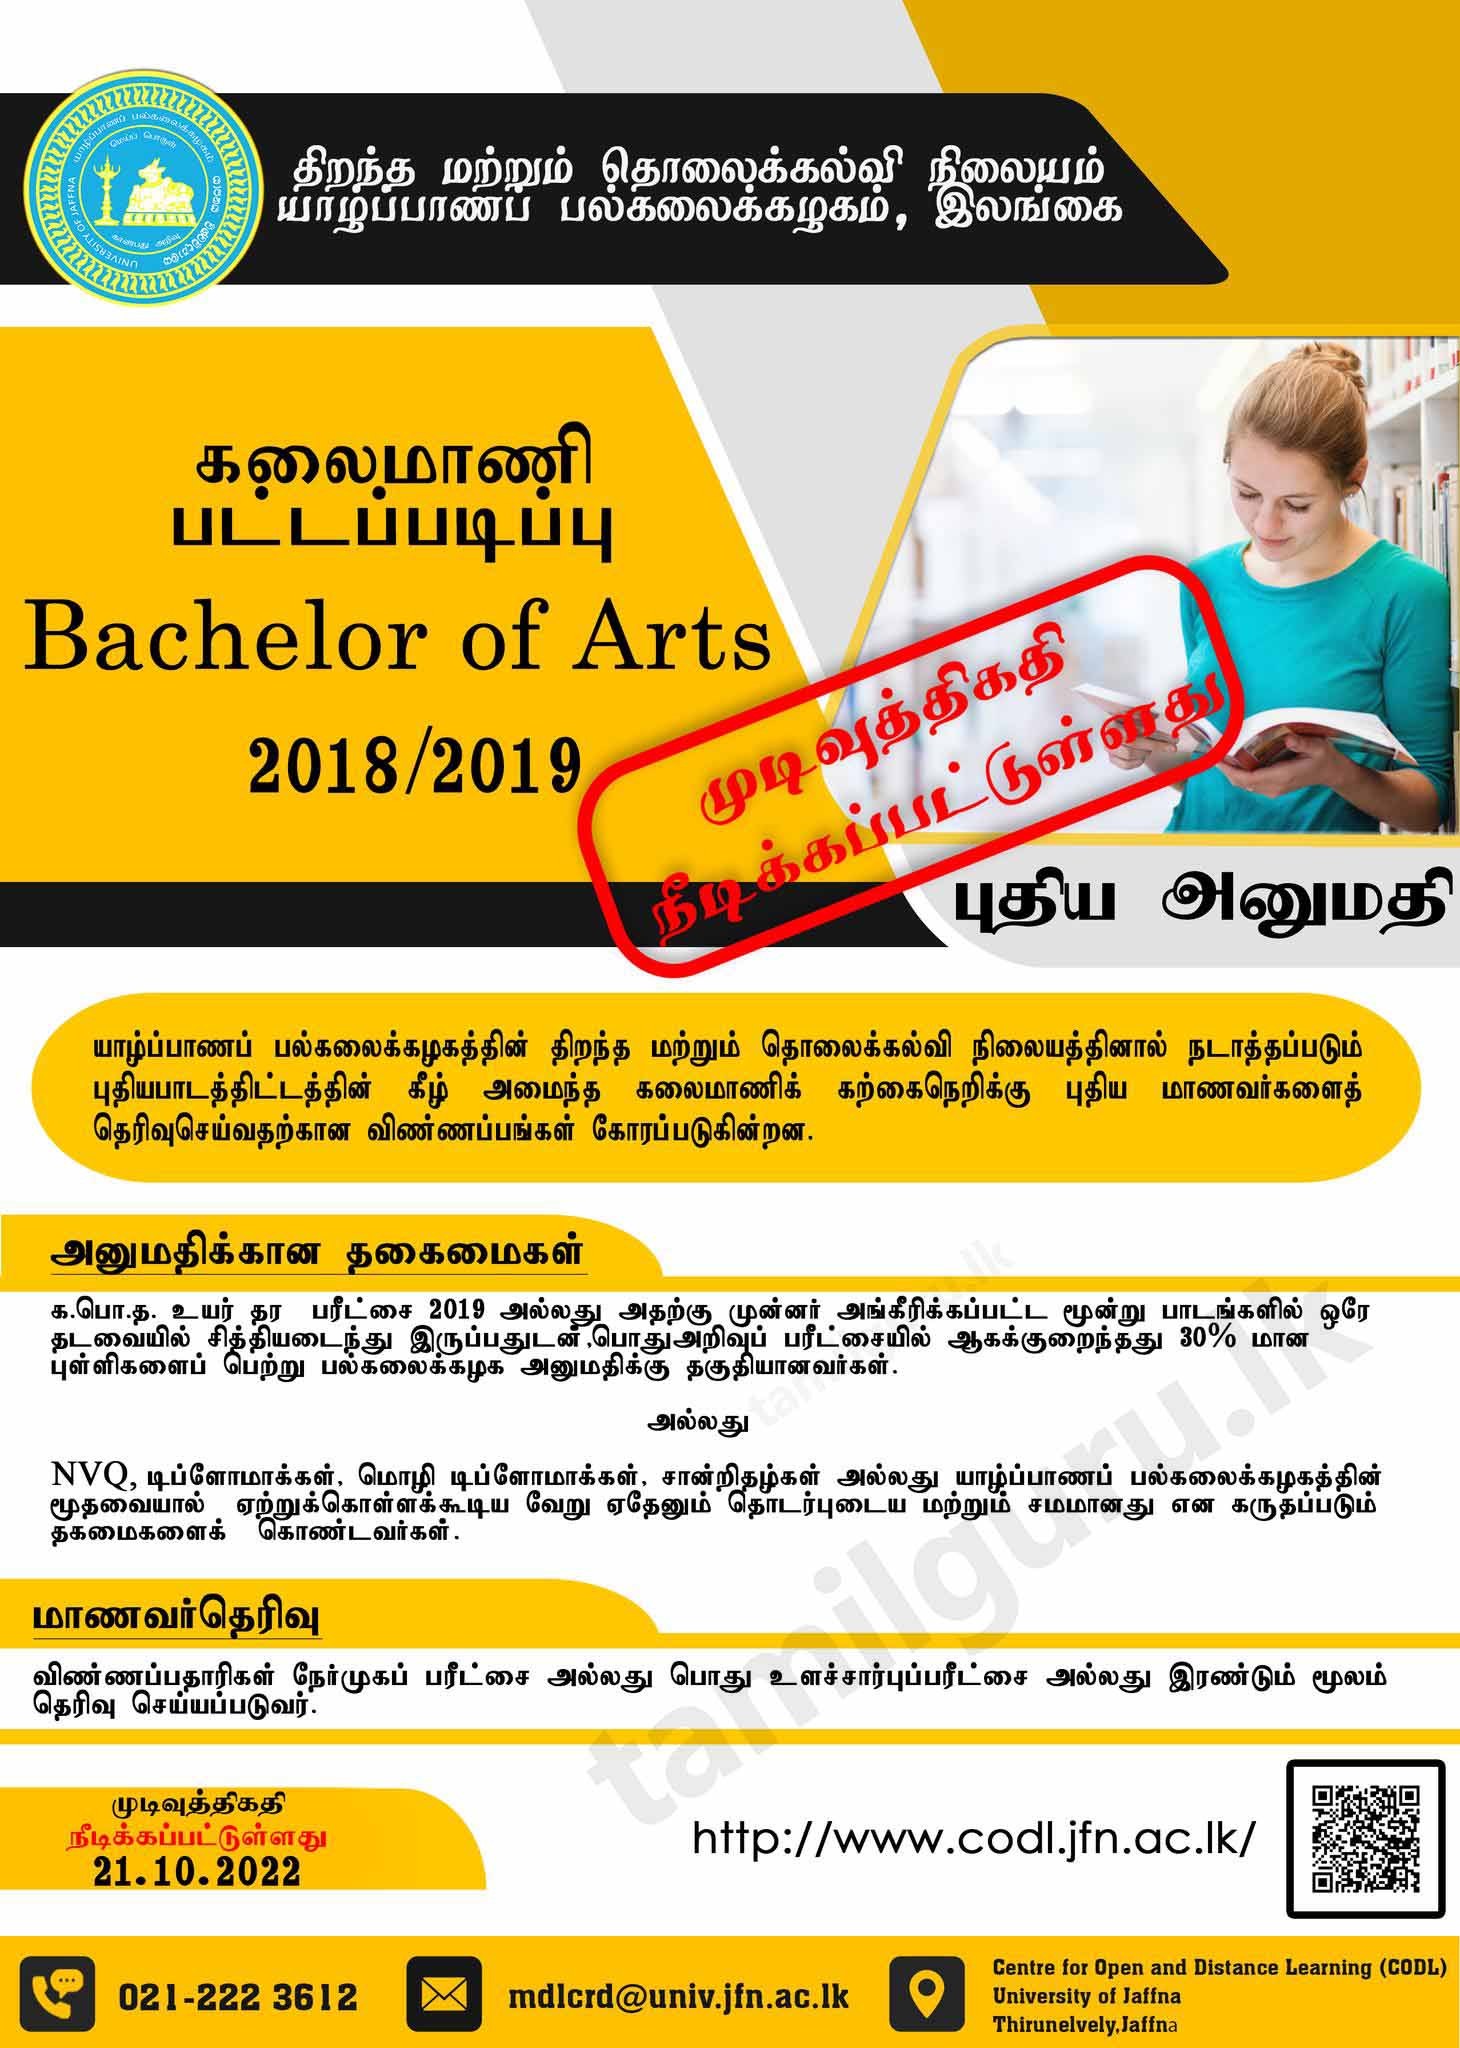 Application for Bachelor of Arts (BA) External Degree Programme (2022) - University of Jaffna